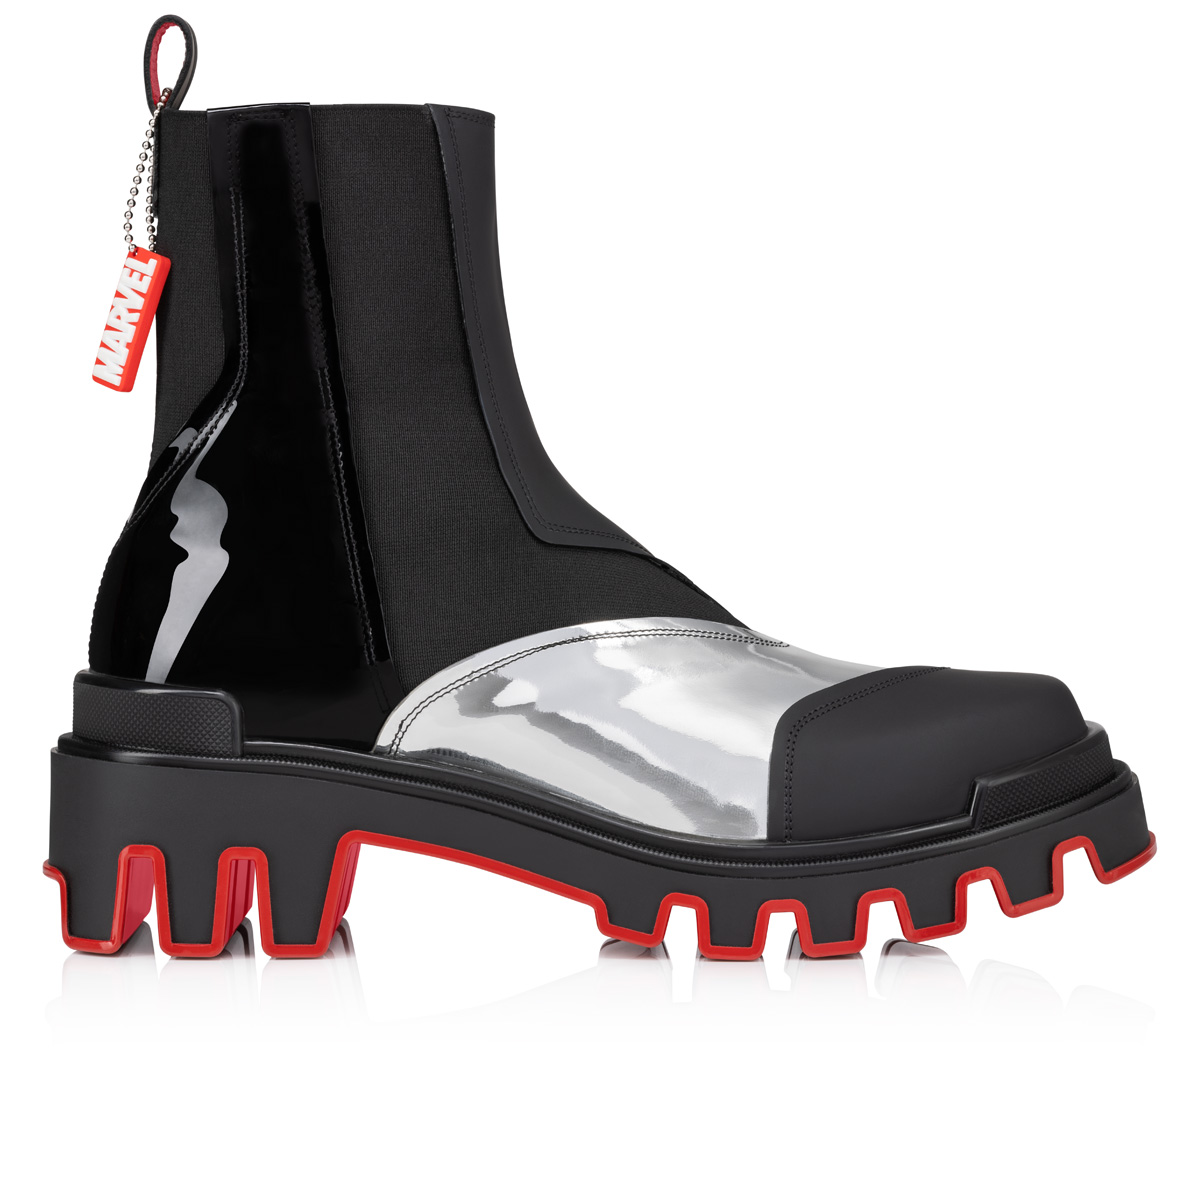 Vibrano - Boots - Calf leather - Black - Christian Louboutin